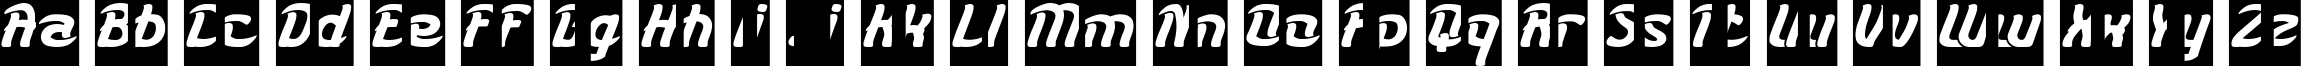 Пример написания английского алфавита шрифтом KARATE-Inverse